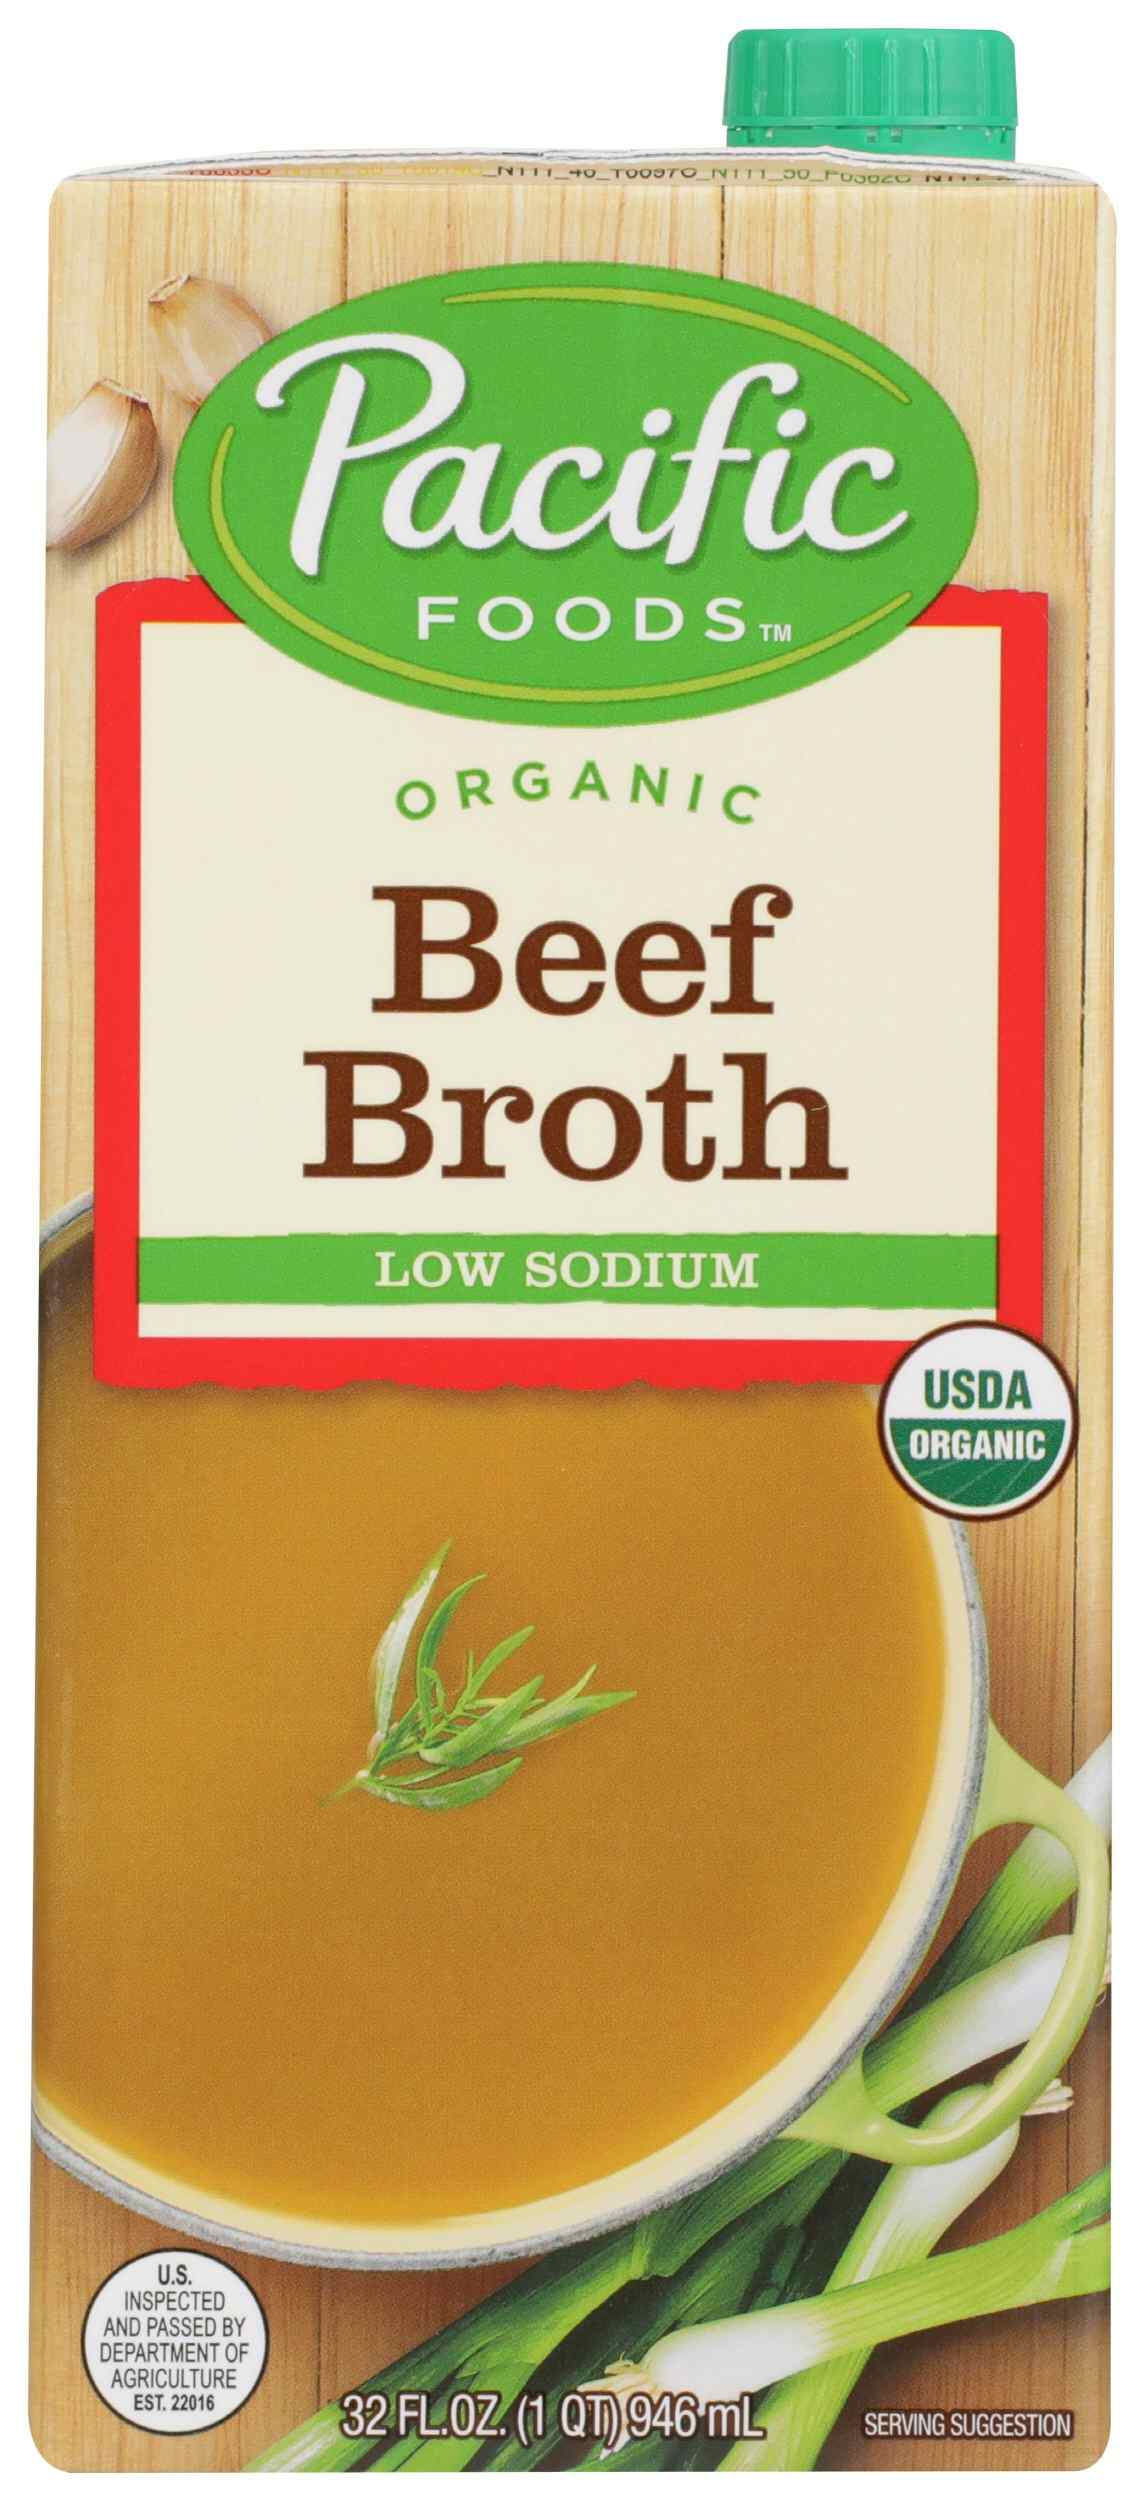 Pacific Foods Low Sodium Organic Beef Broth